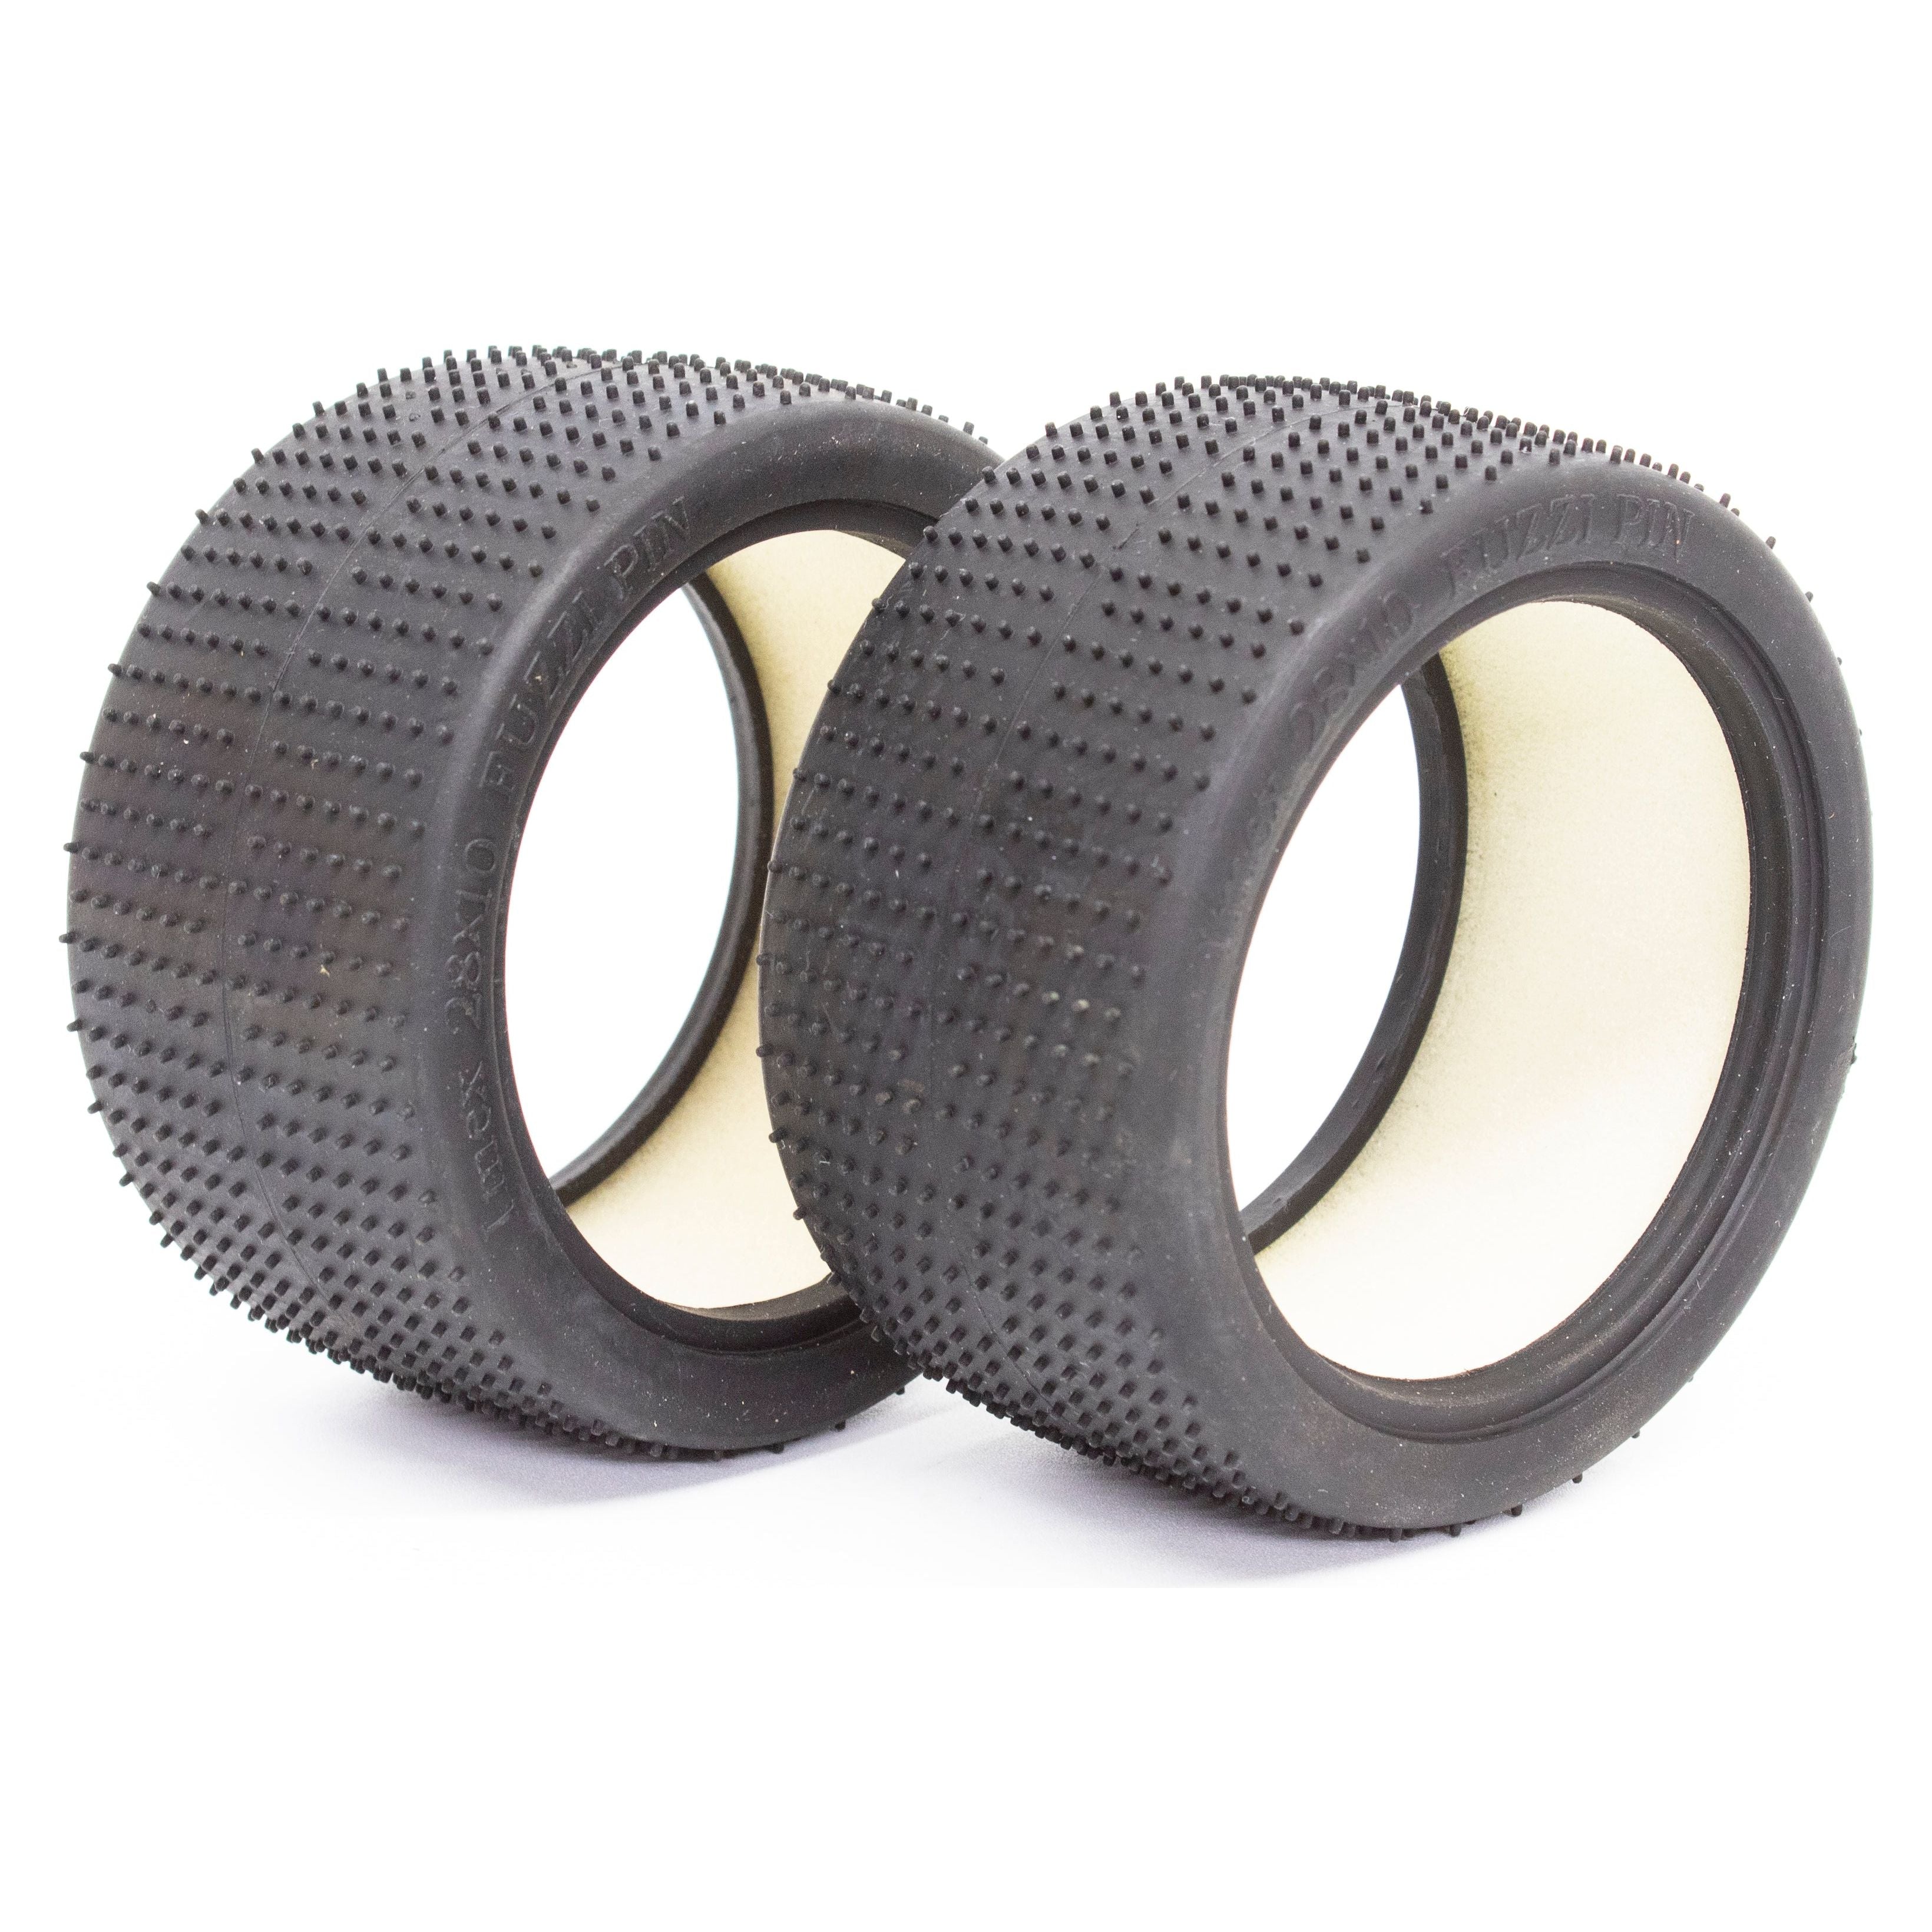 IMEX 2.8 Fuzzy Pin (Soft) Tires (1 Pair)